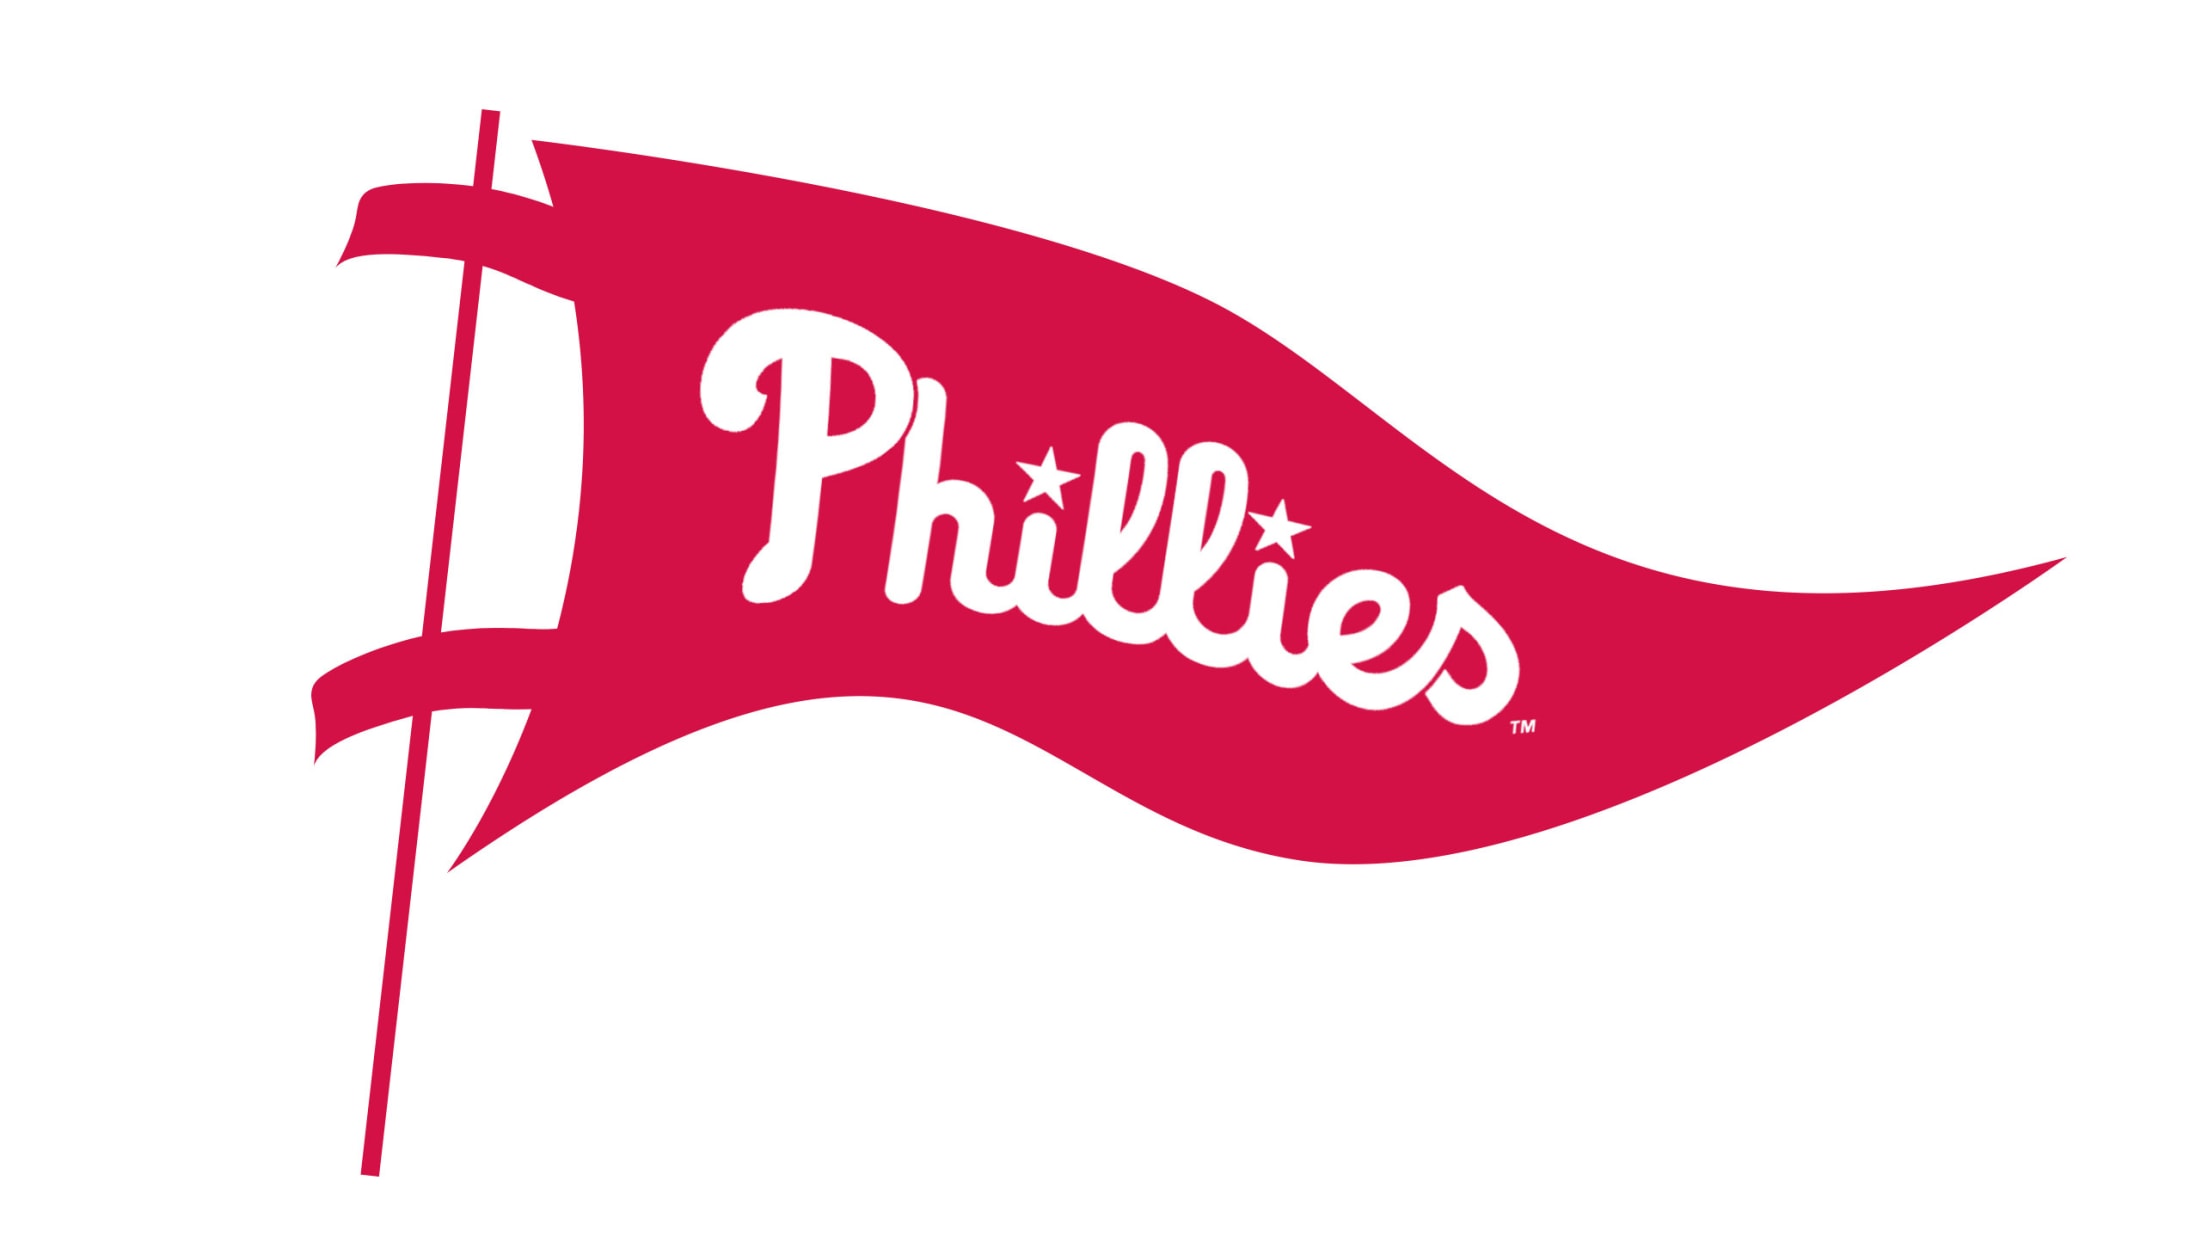 Philadelphia Phillies transparent background PNG cliparts free download